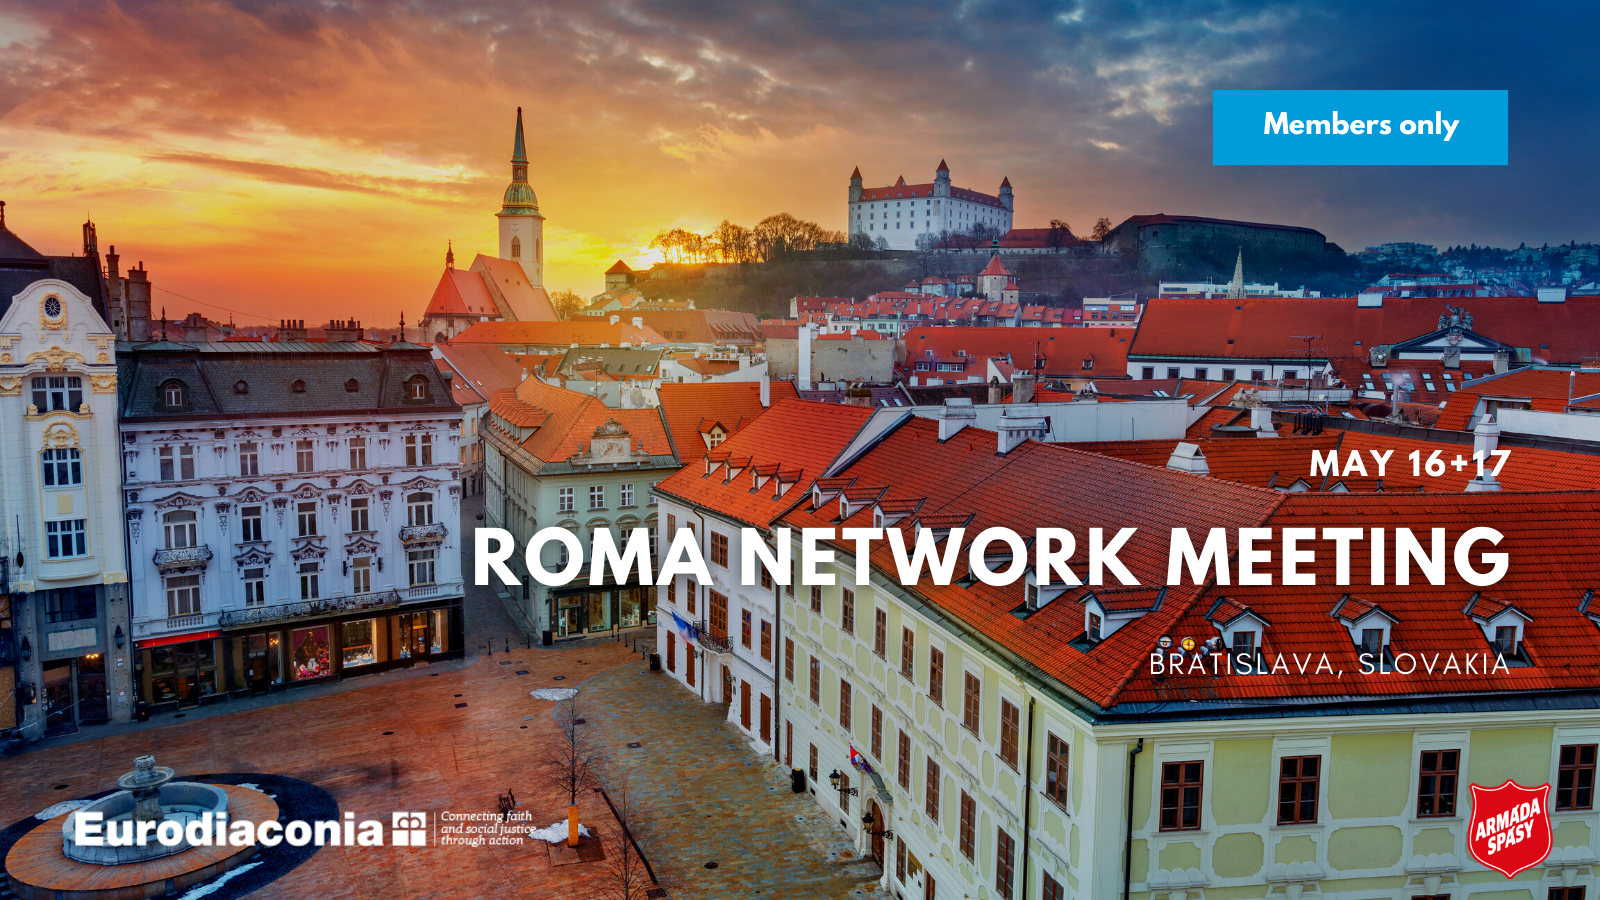 Roma network meeting | Members Only event Bratislava, Slovakia